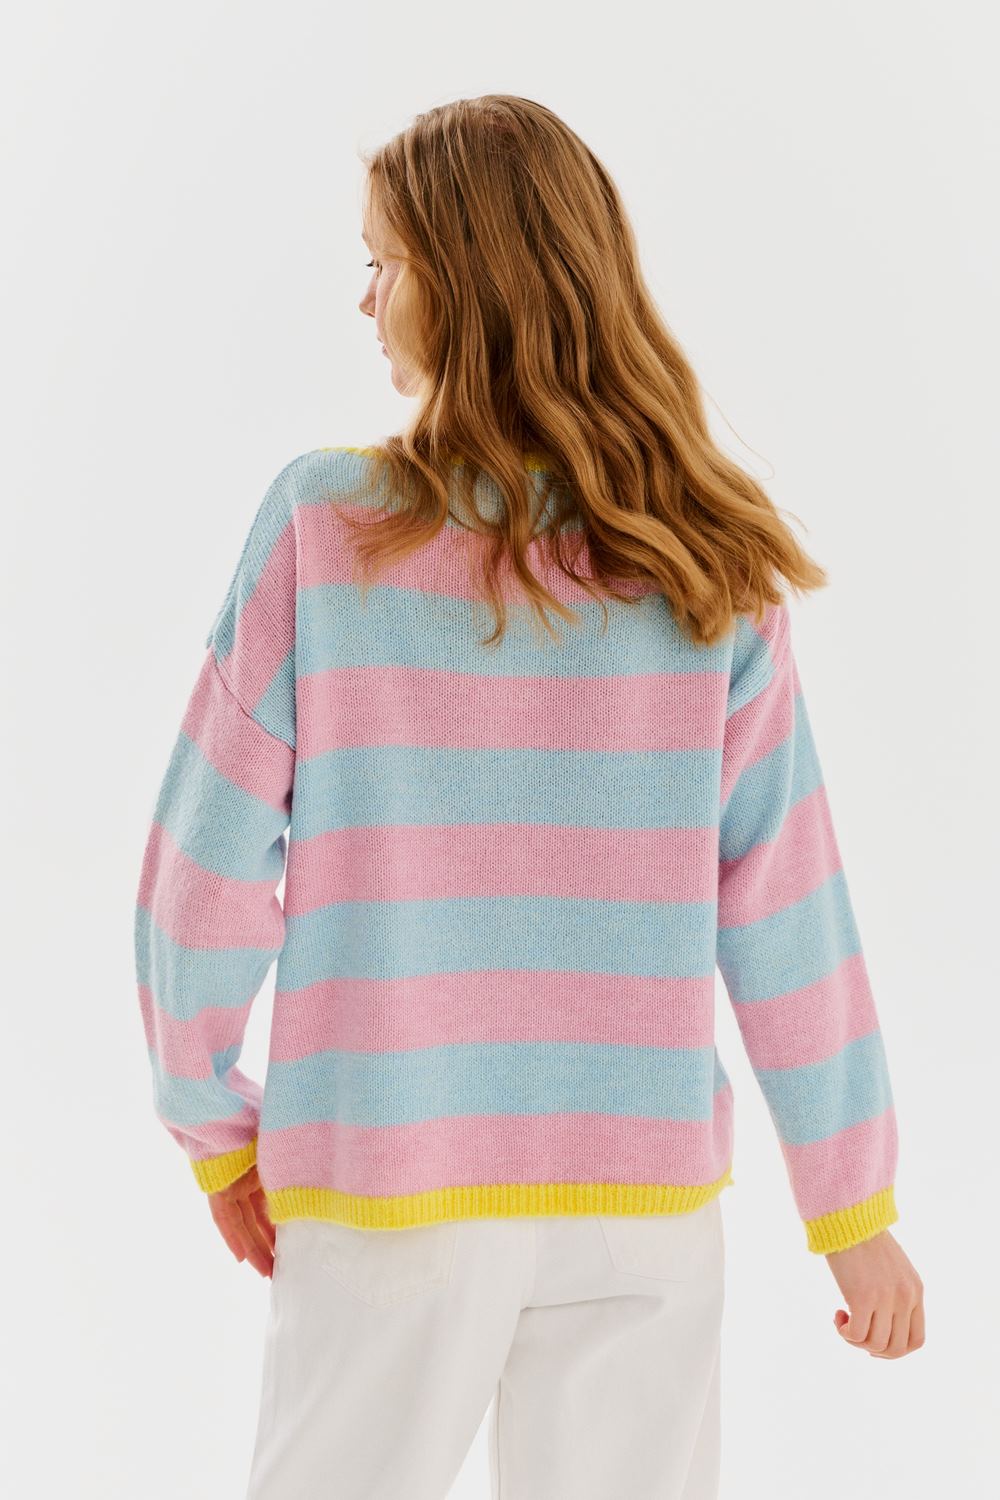 Vibrant Spirit sweater